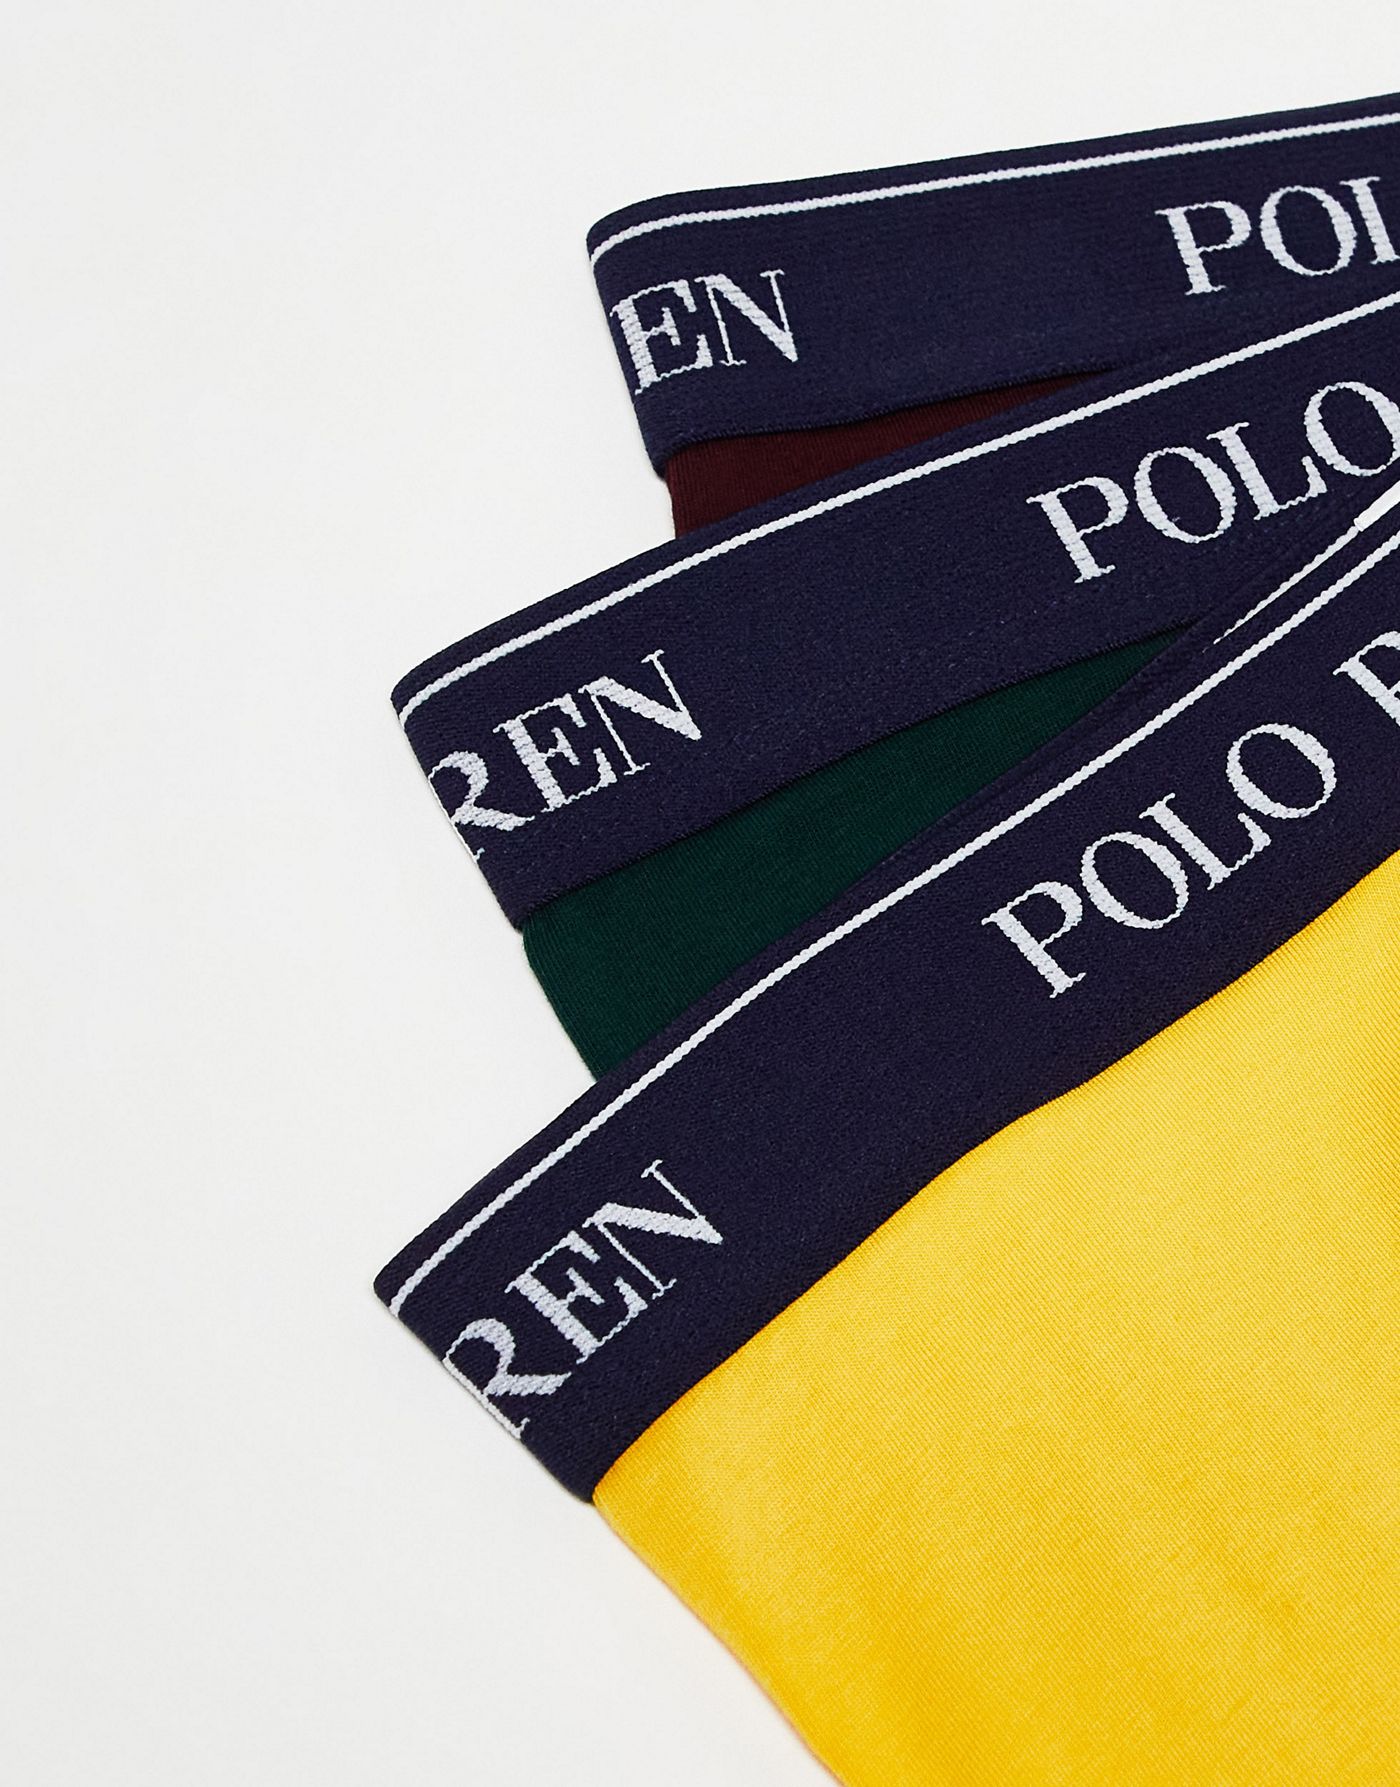 Polo Ralph Lauren 3 pack trunks in green burgundy yellow with logo waistband